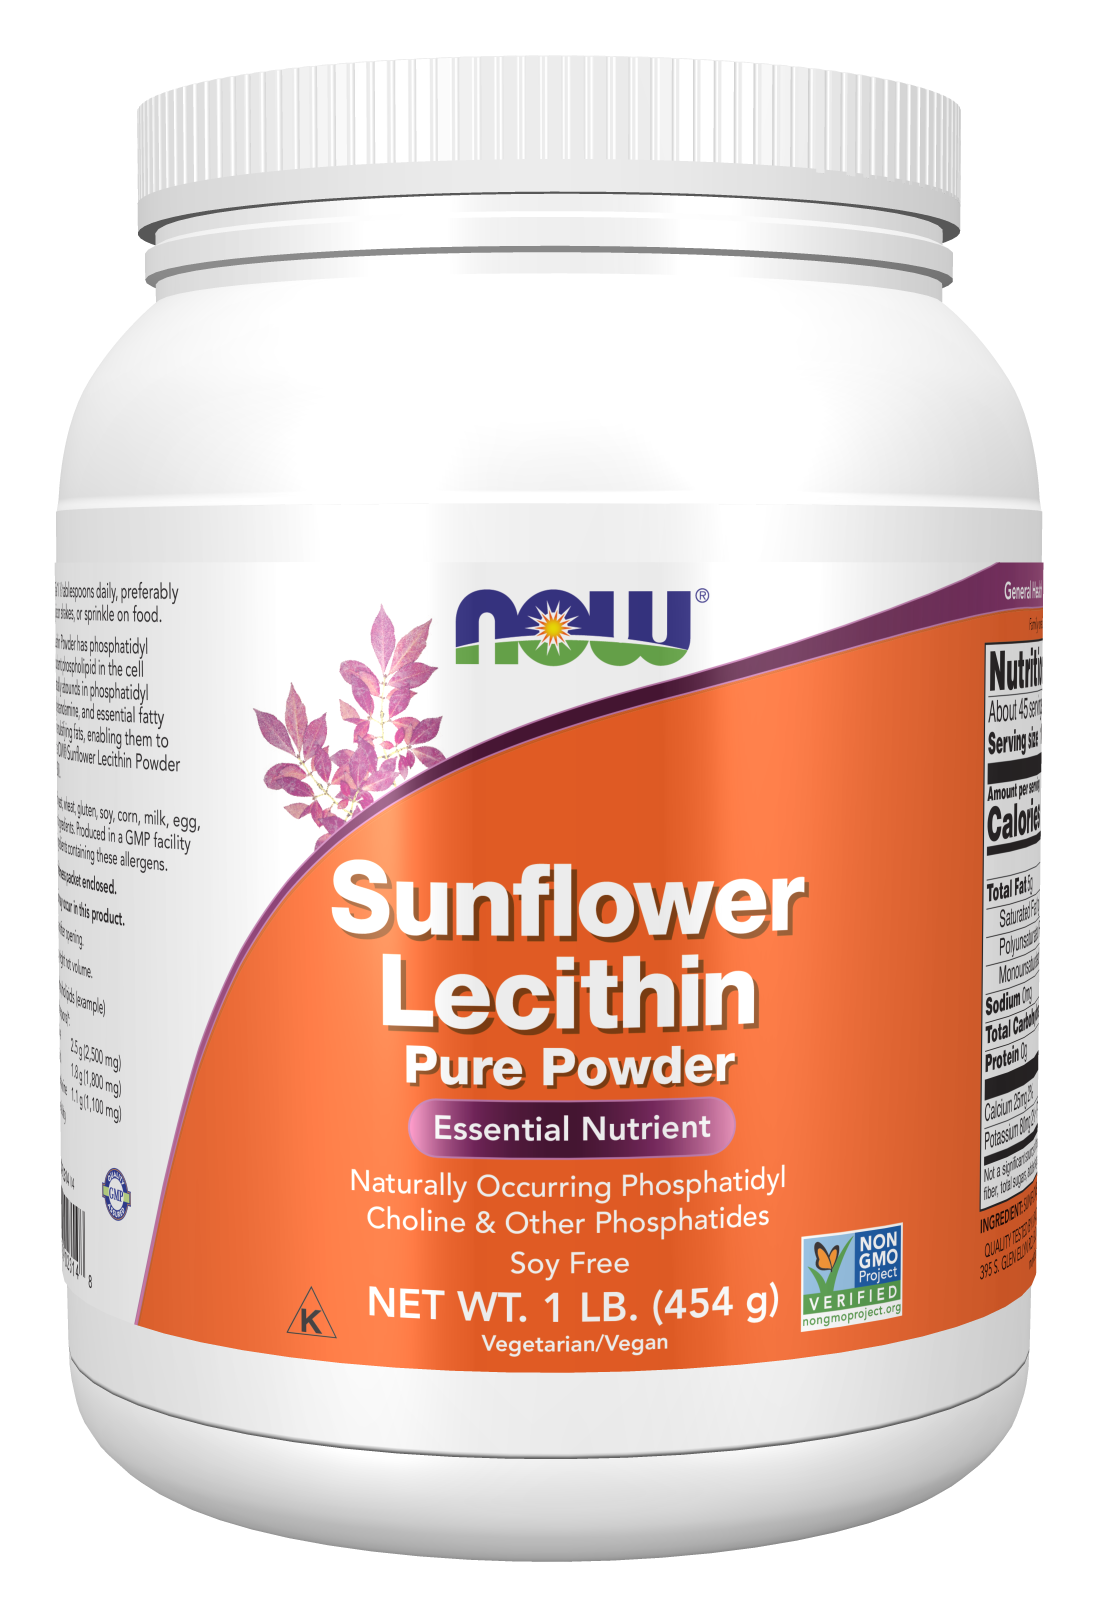 Sunflower Lecithin Pure Powder - 1 lb. Bottle Front